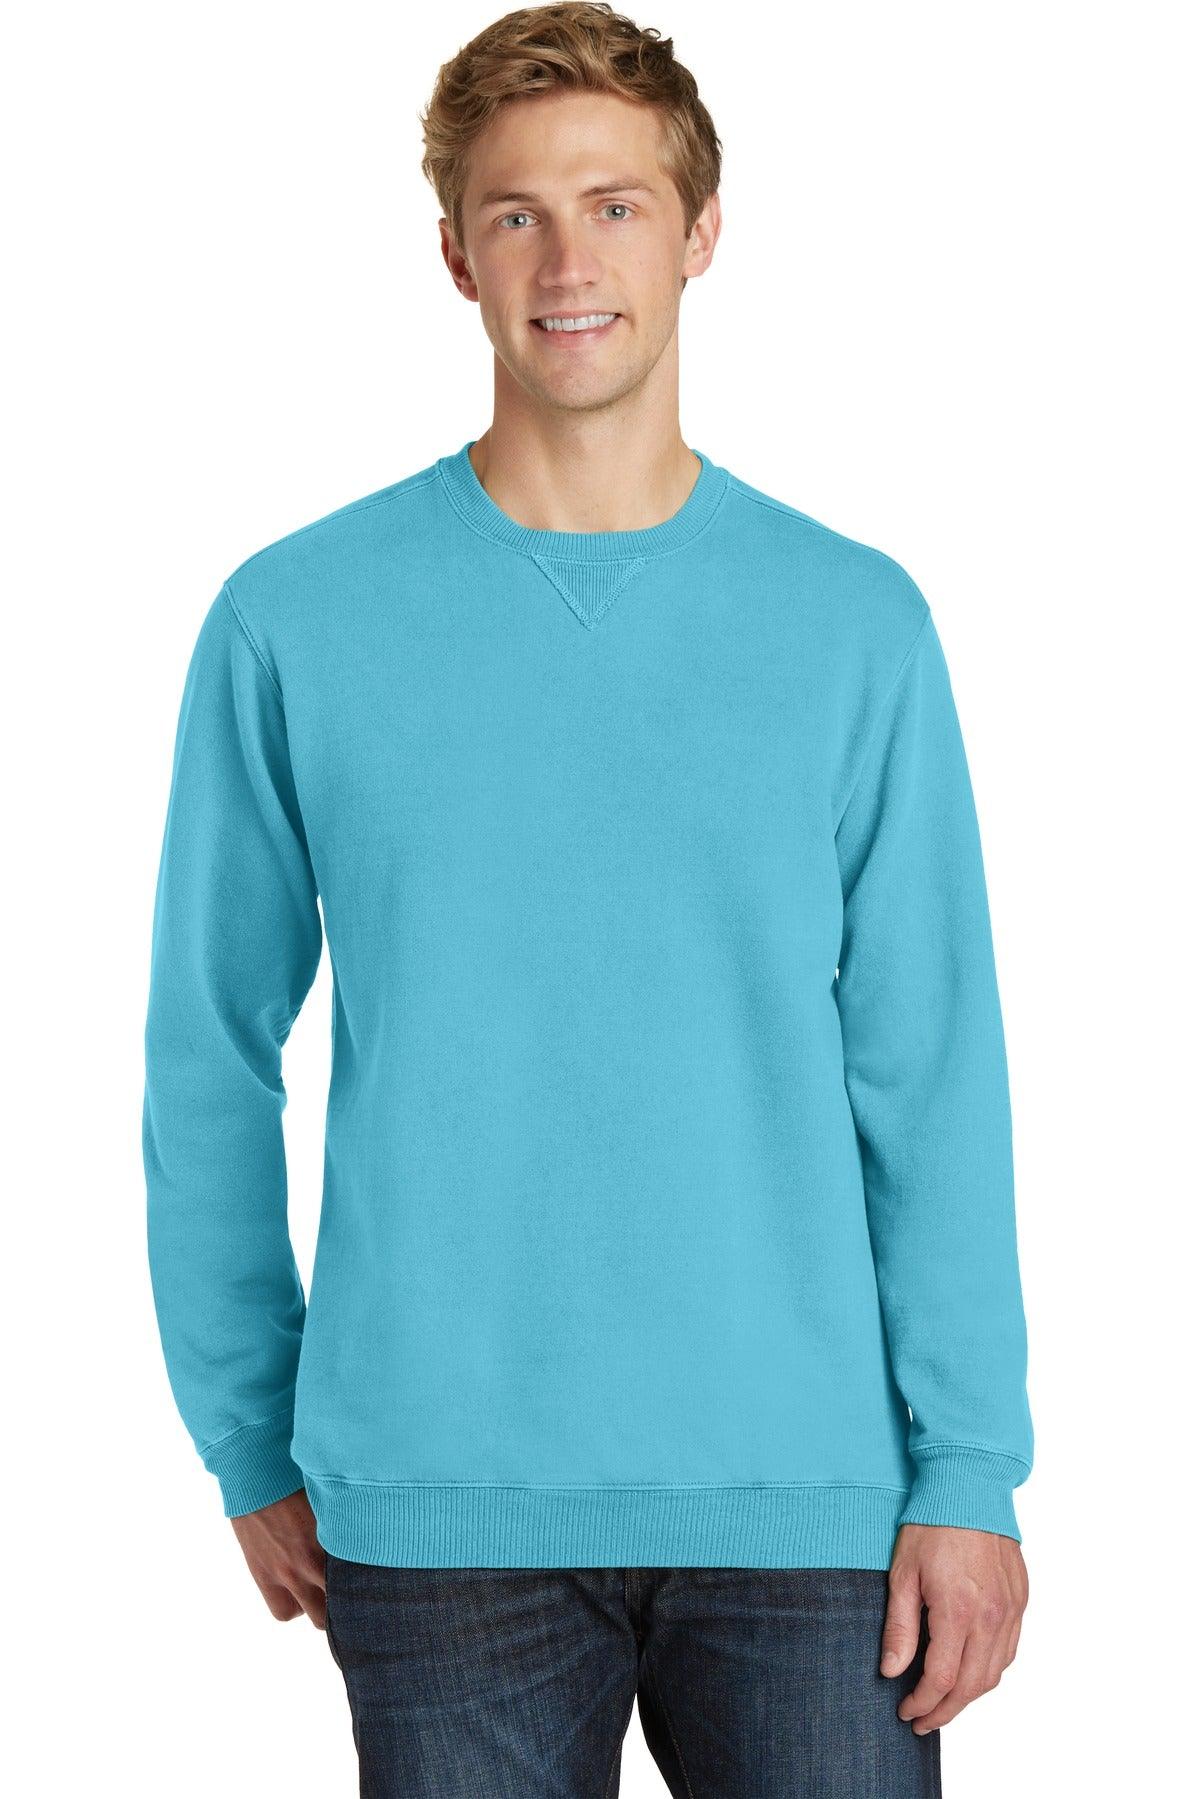 Port & Company Beach Wash Garment-Dyed Sweatshirt PC098 - Dresses Max